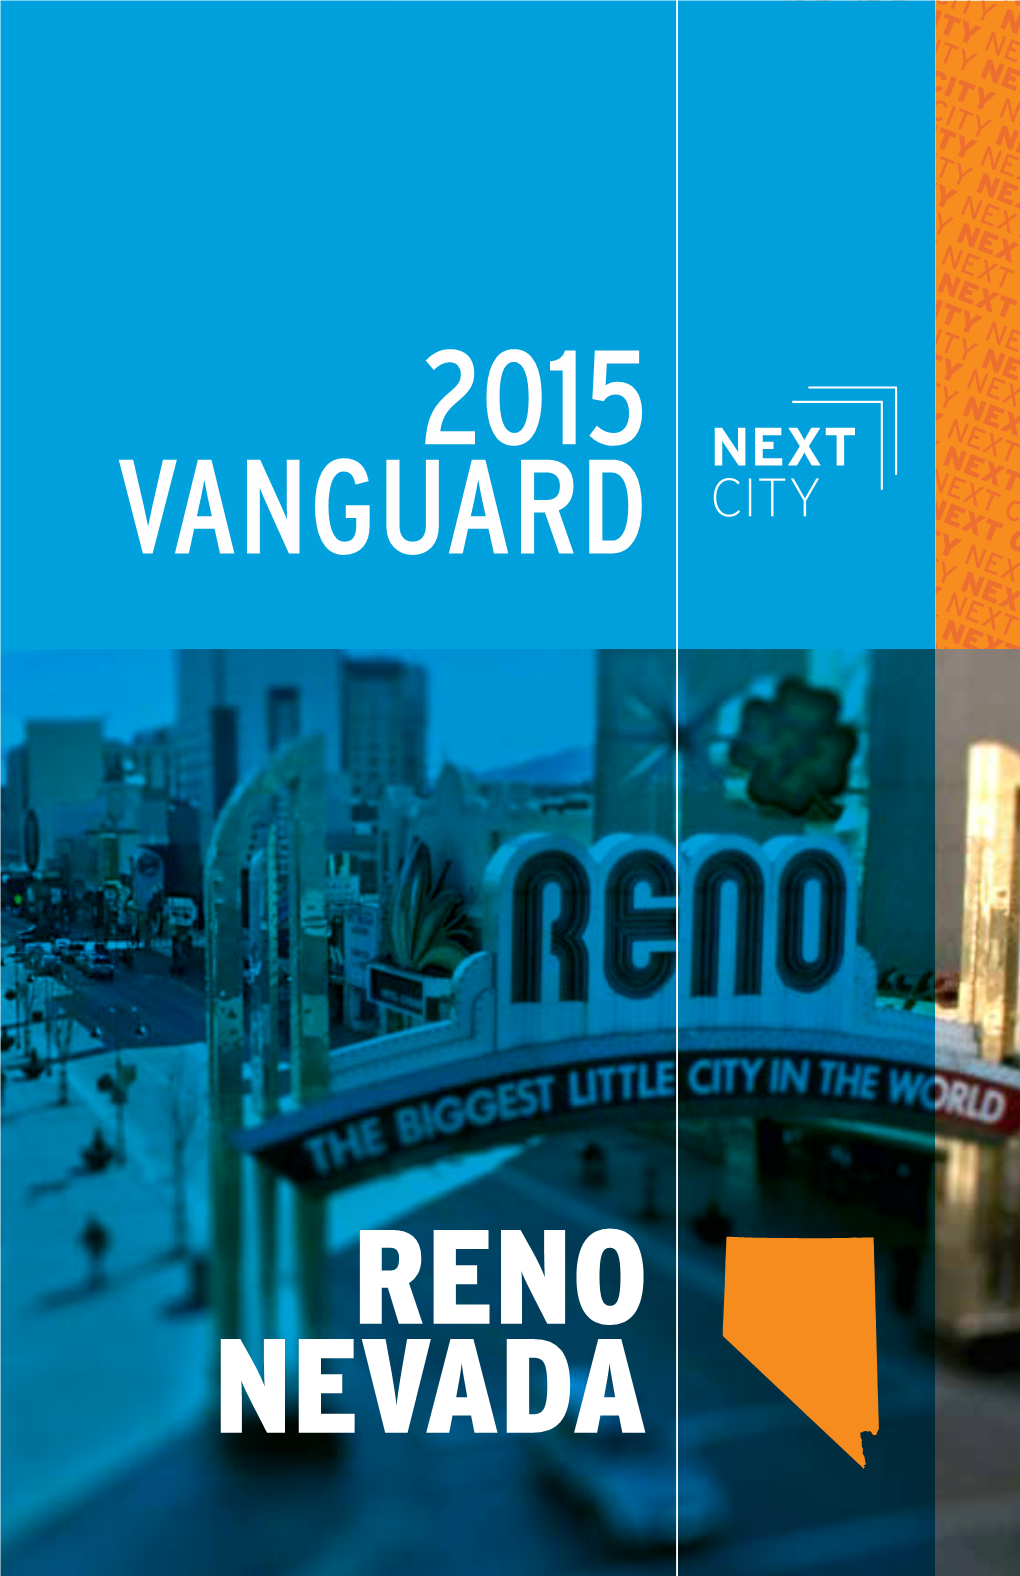 Reno Nevada 2015 Vanguard